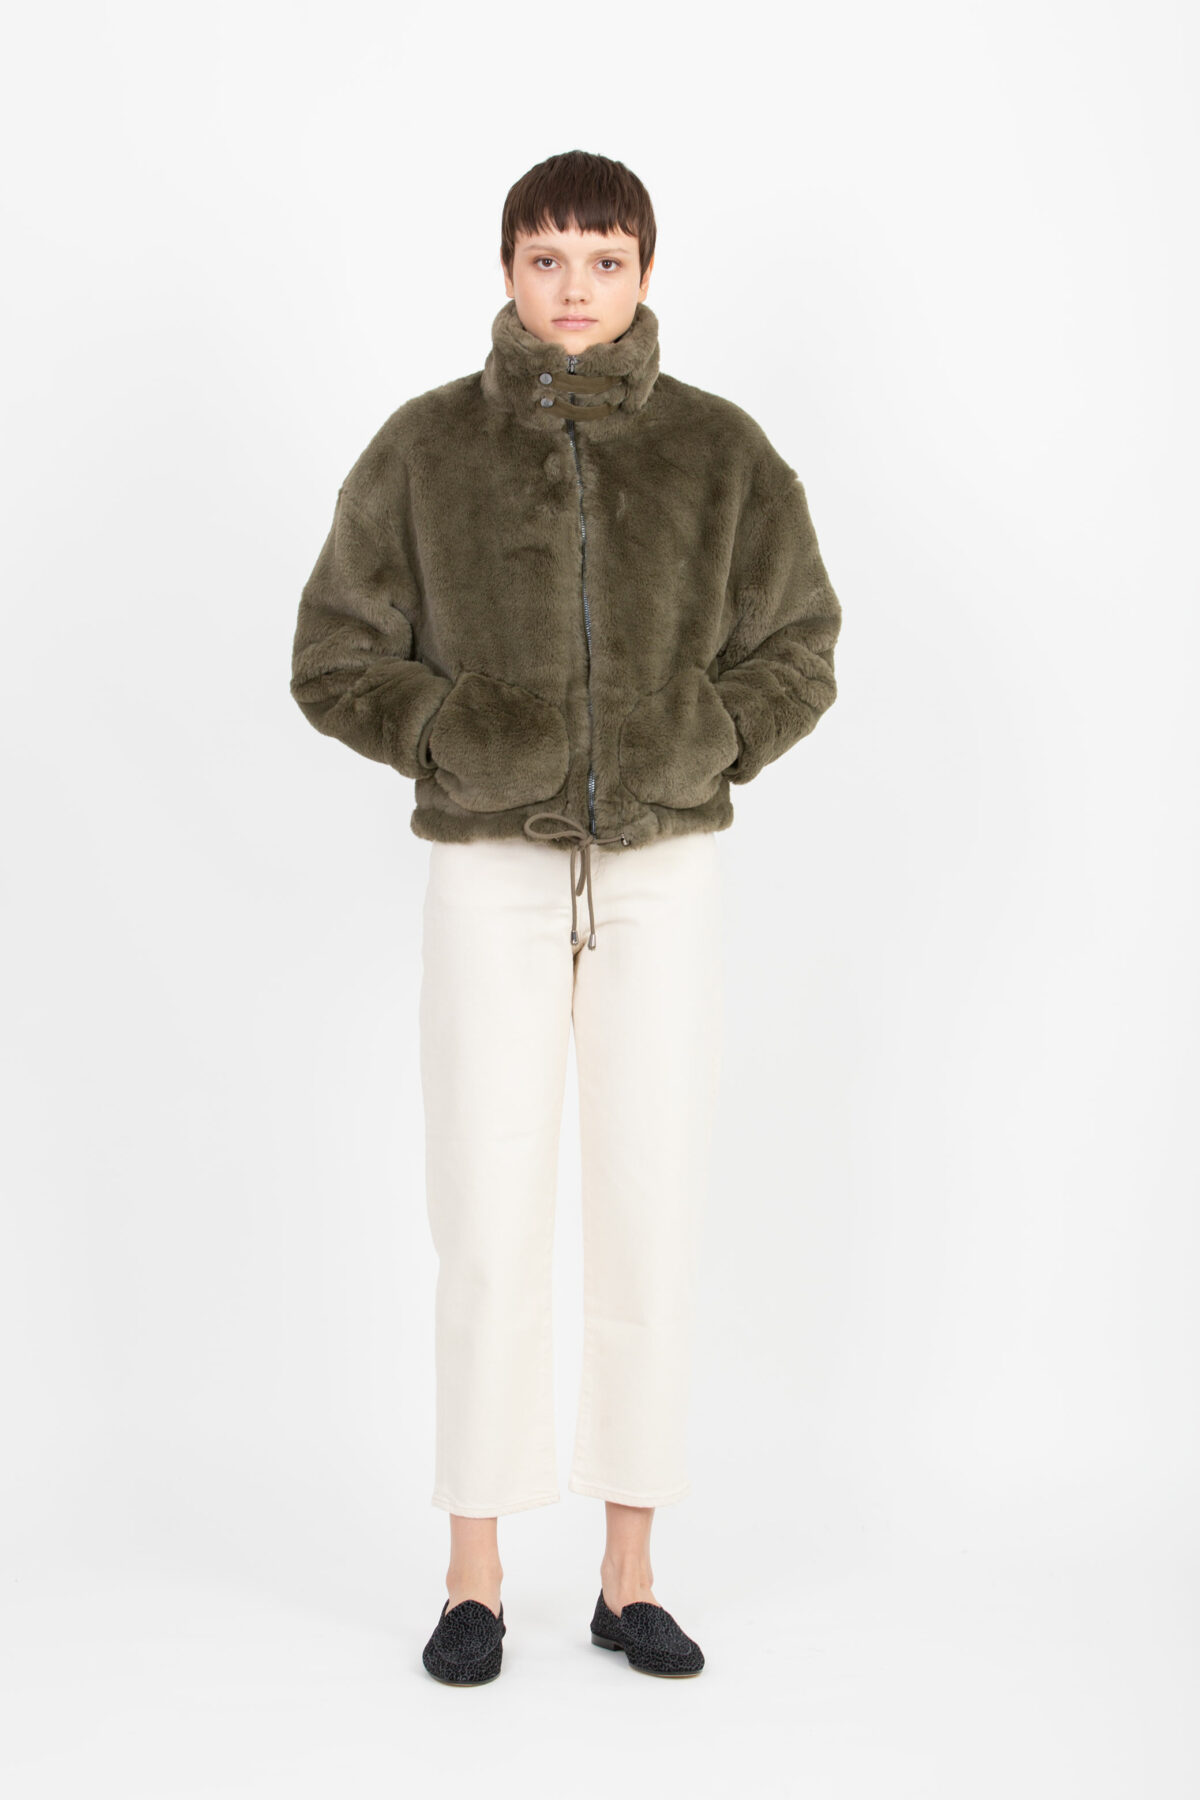 morea-khaki-faux-fur-jacket-high-neck-berenice-matchboxathens